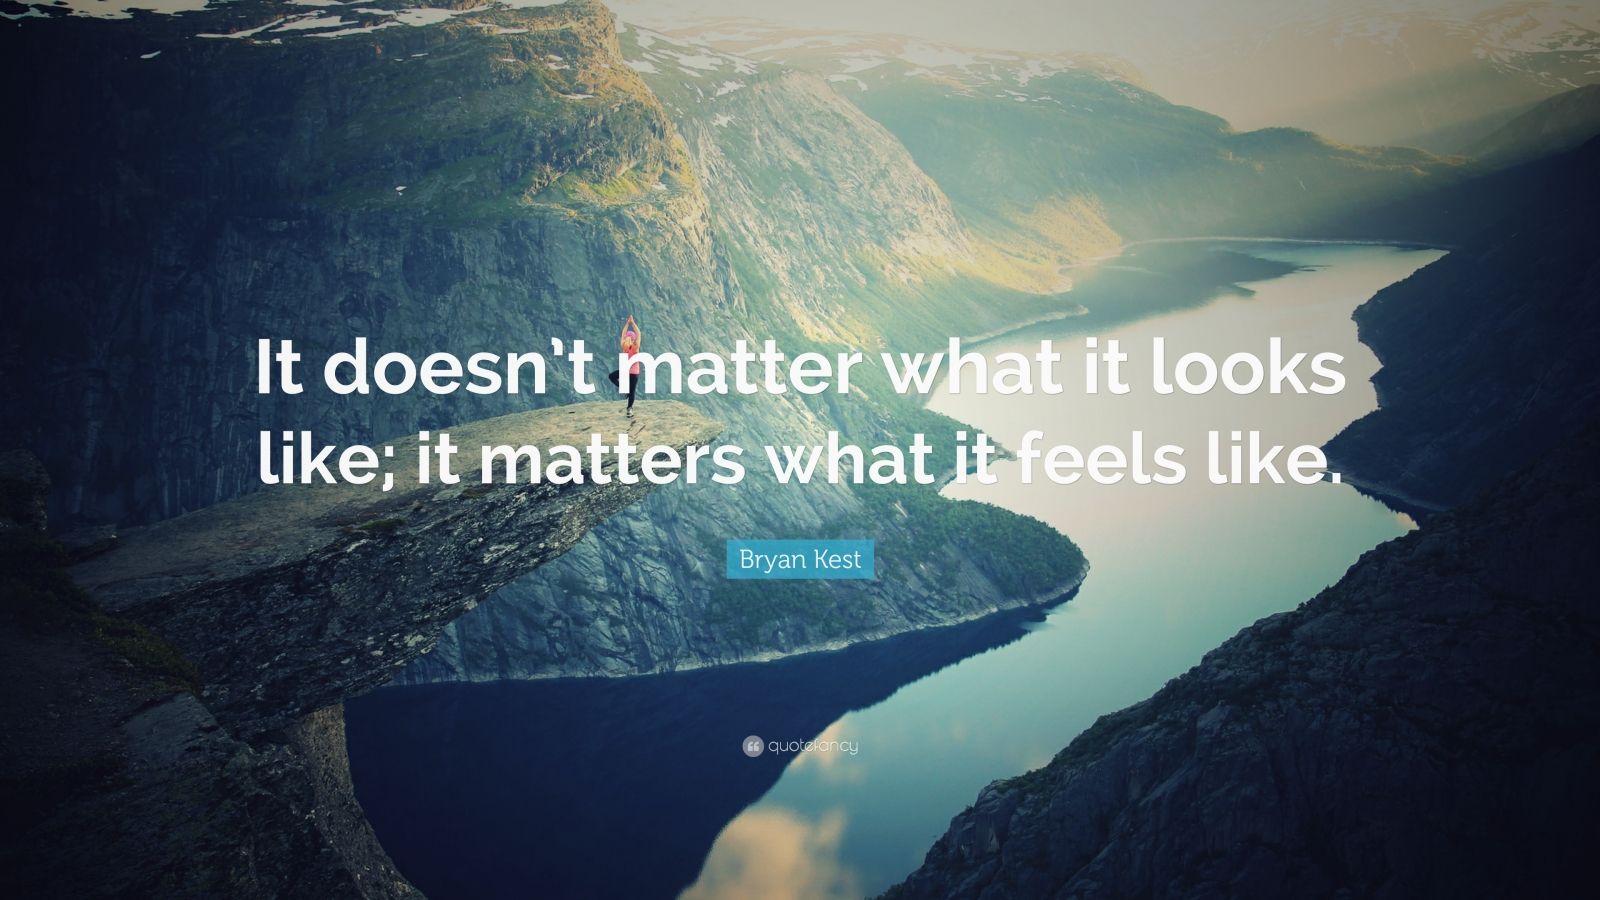 Bryan Kest Quote: “It doesn’t matter what it looks like; it matters ...